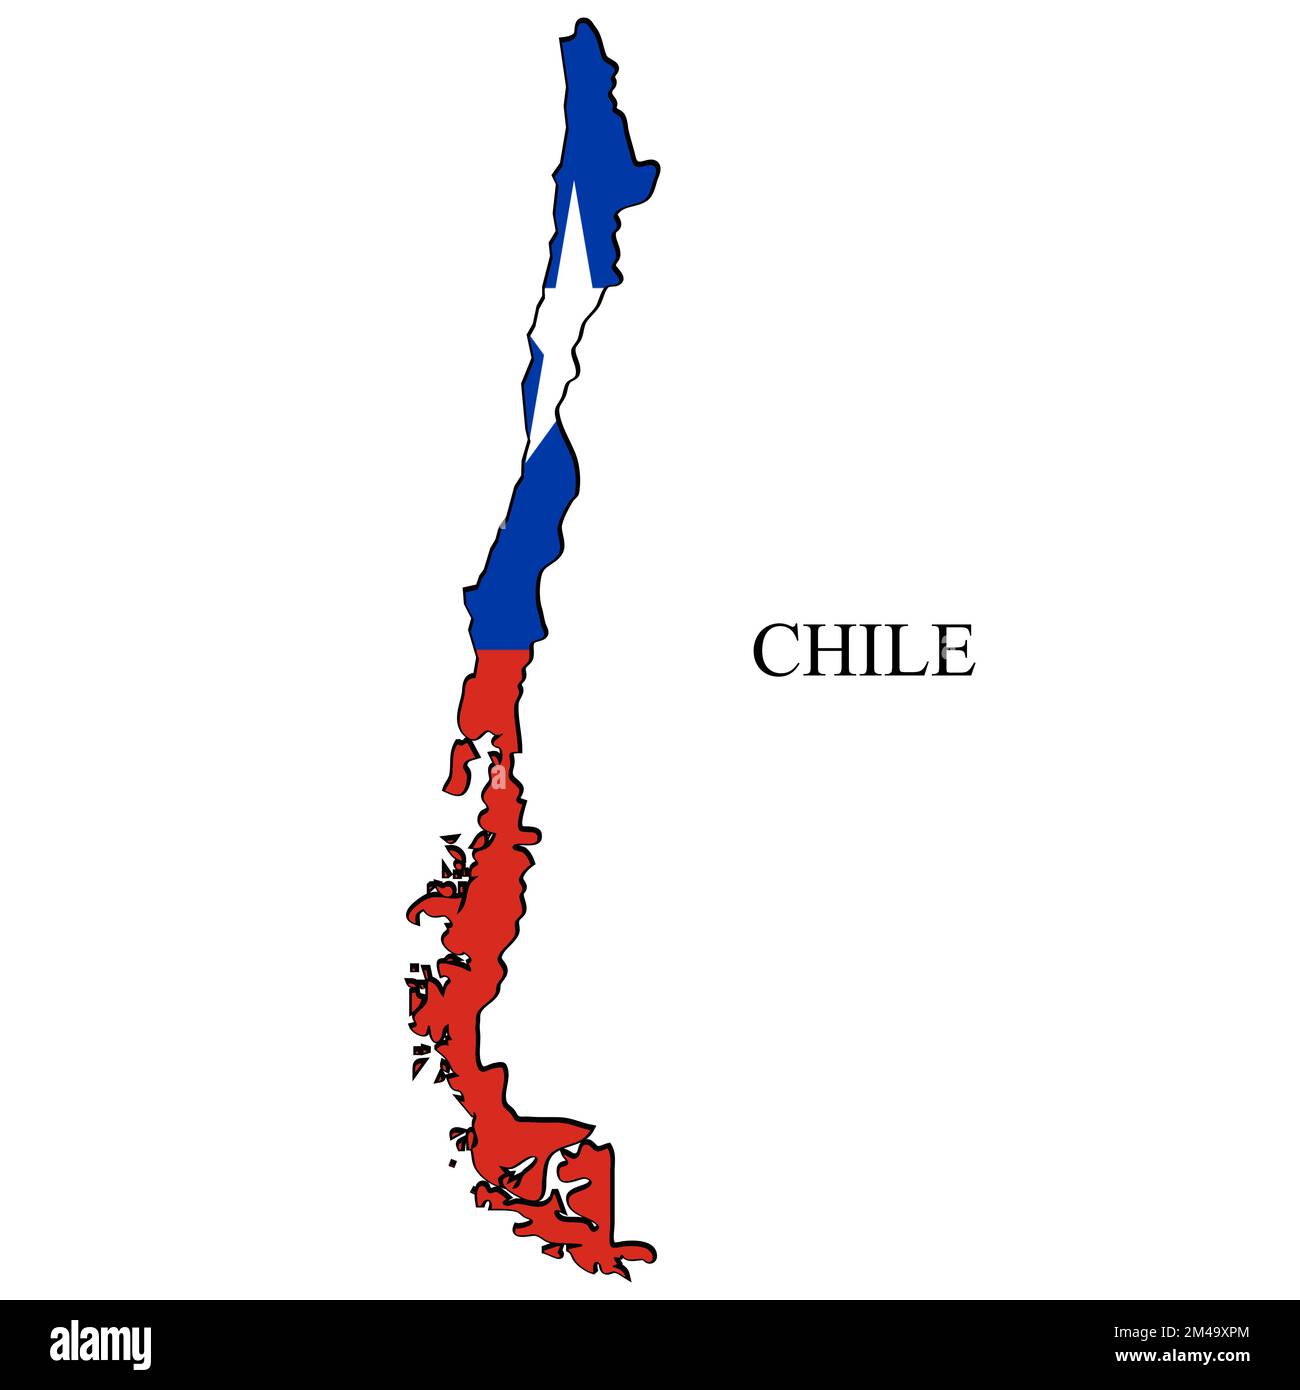 Darstellung des Kartenvektors Chile. Weltwirtschaft. Berühmtes Land. Südamerika. Lateinamerika. Amerika. Stock Vektor